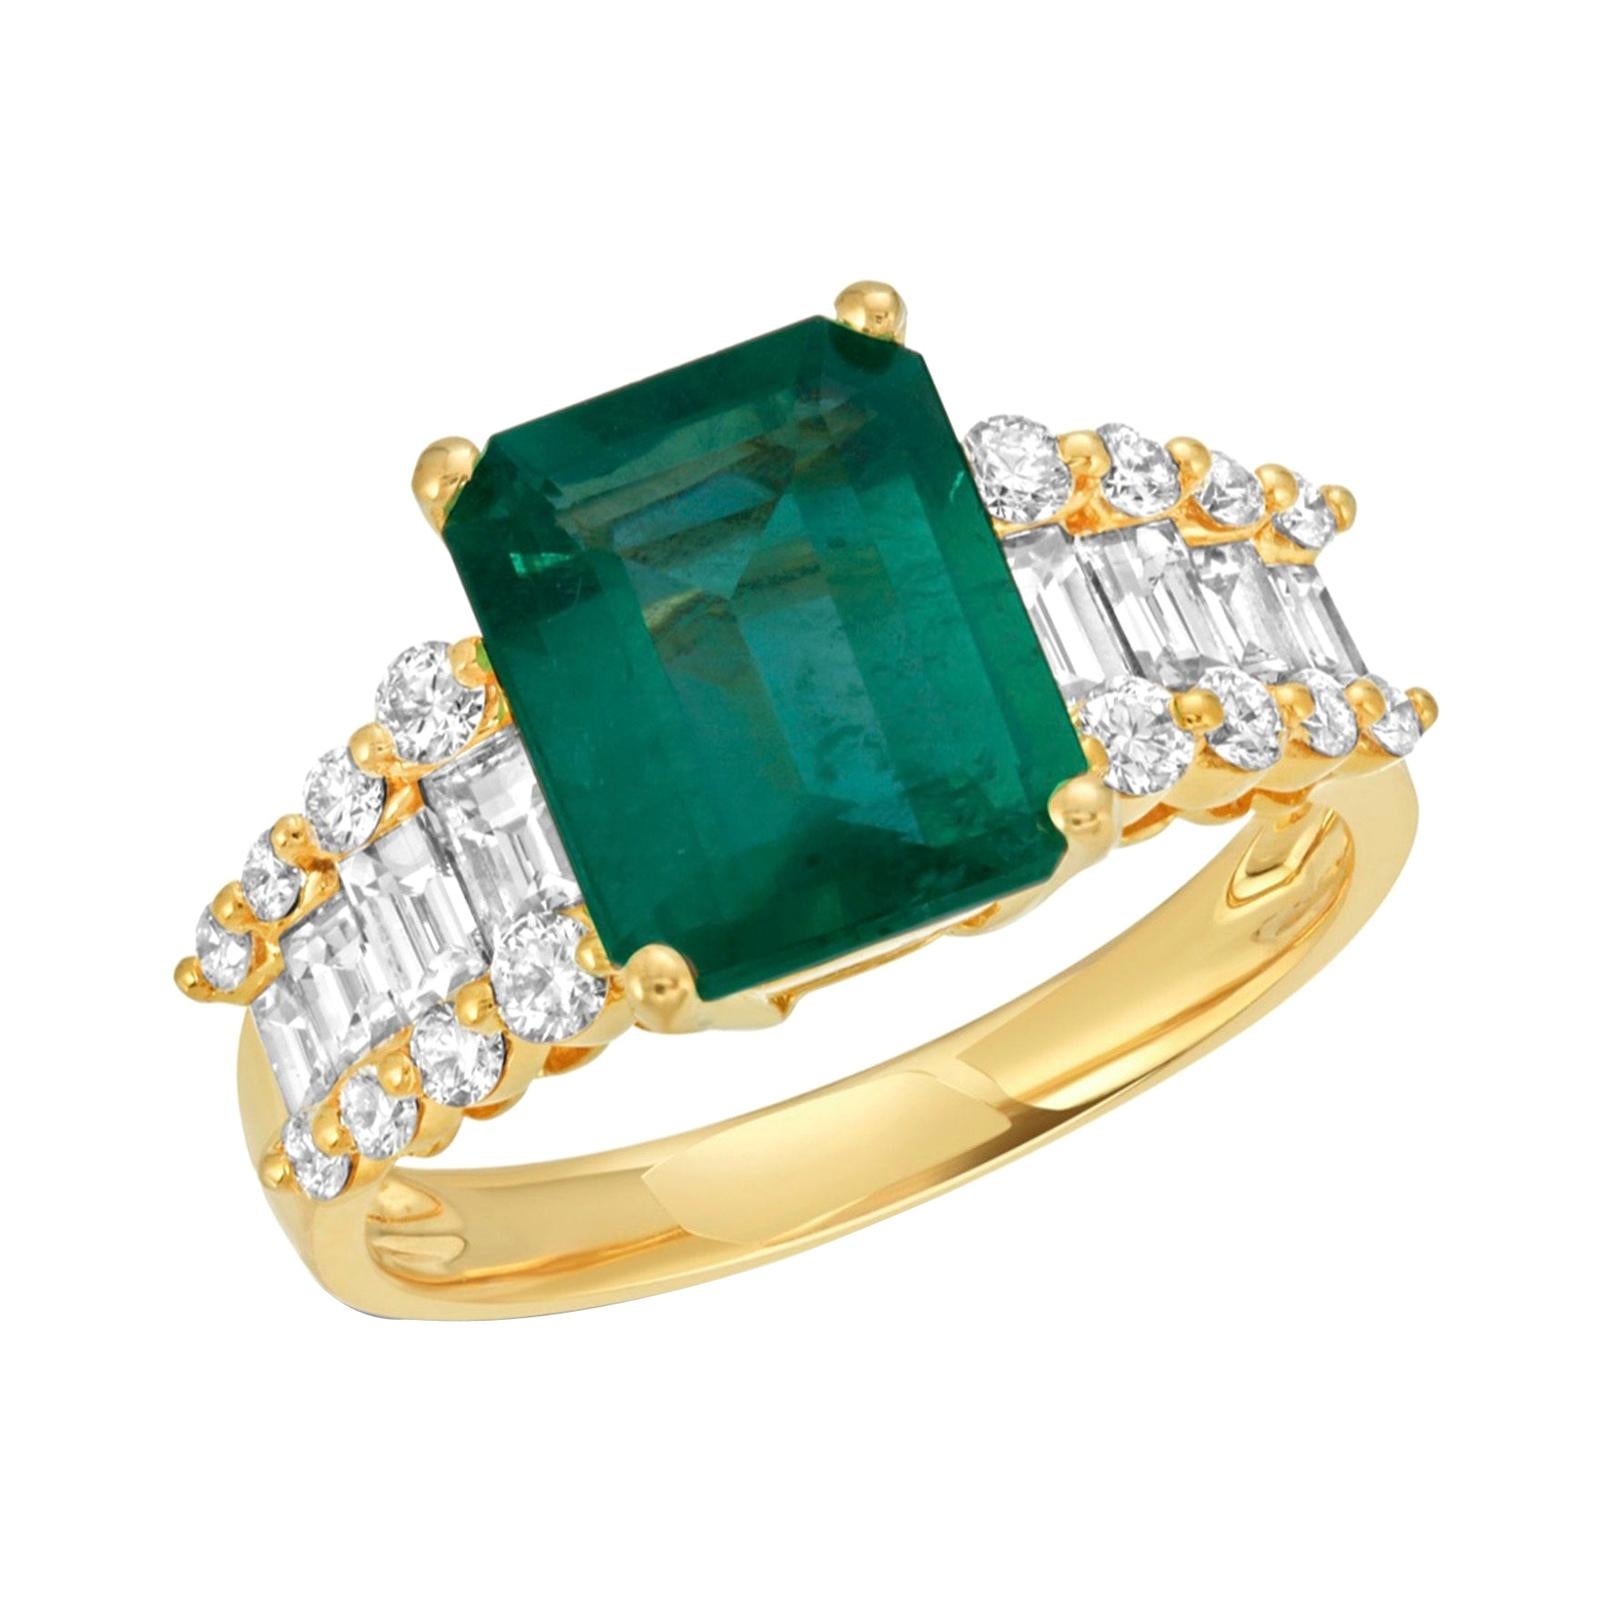 2.58 Ct Zambian Emerald & 1.03 Ct Diamonds in 18k Yellow Gold Engagement Ring